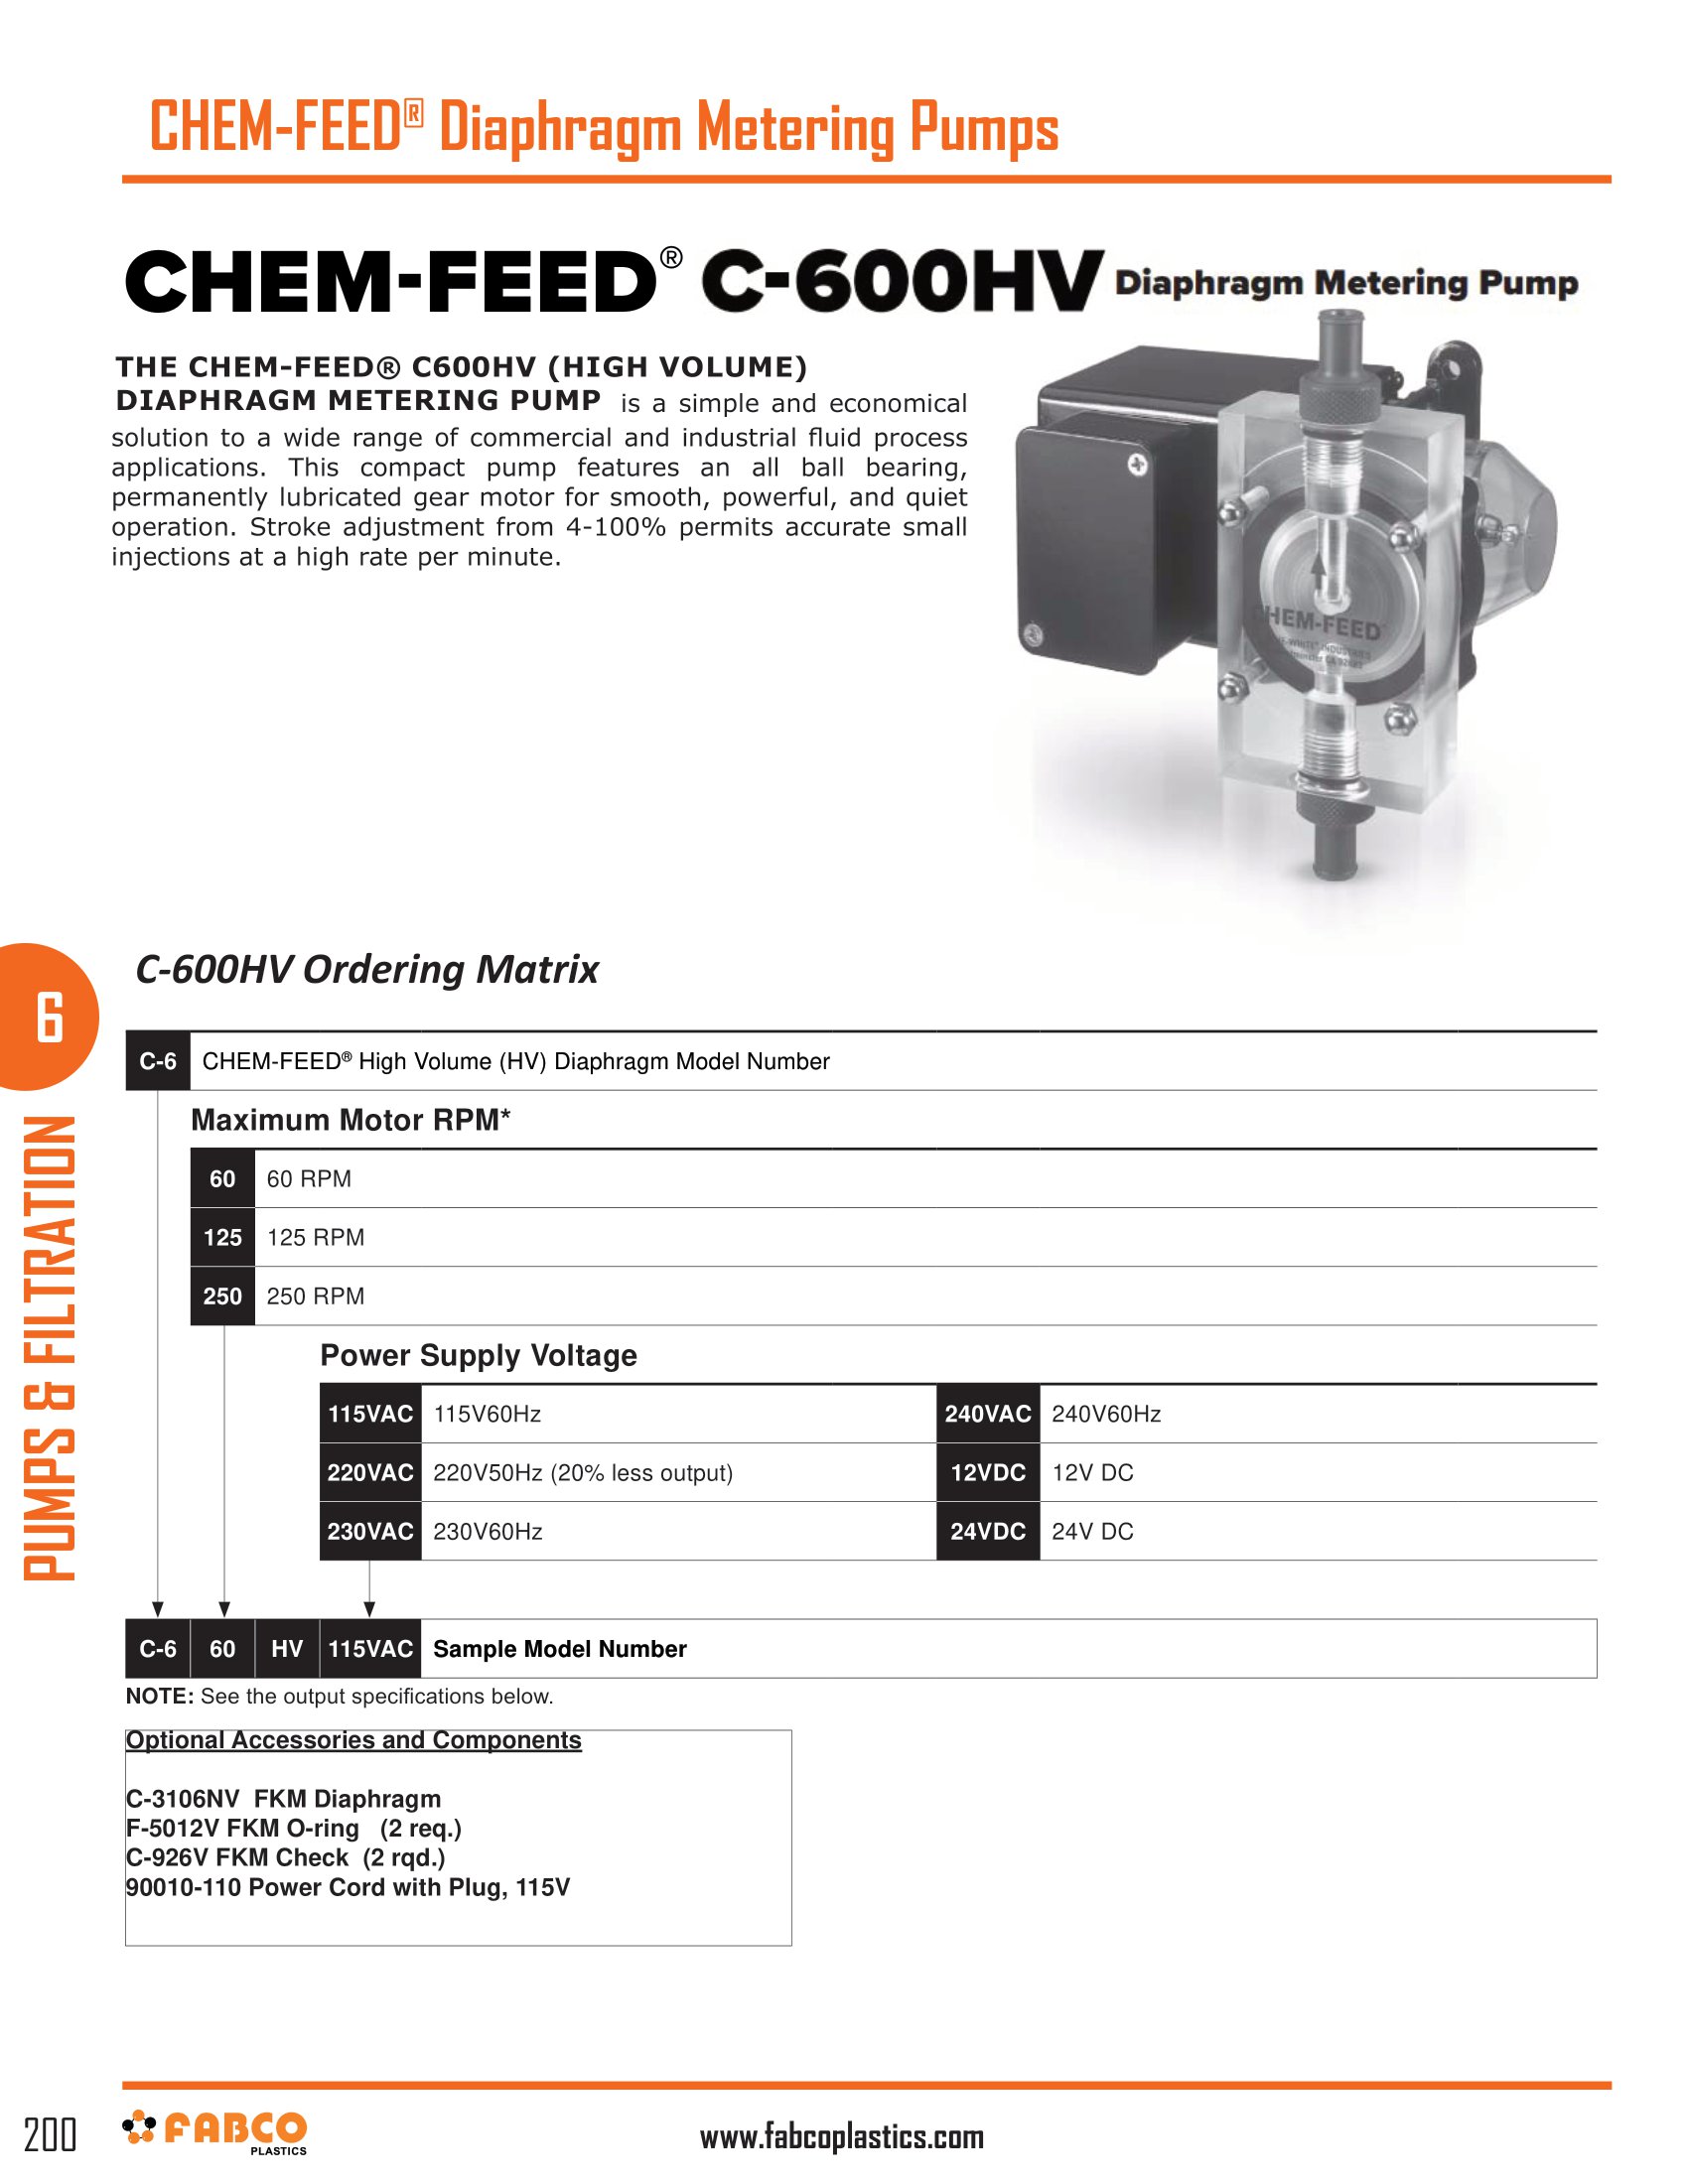 CHEM-FEED®  C-600P